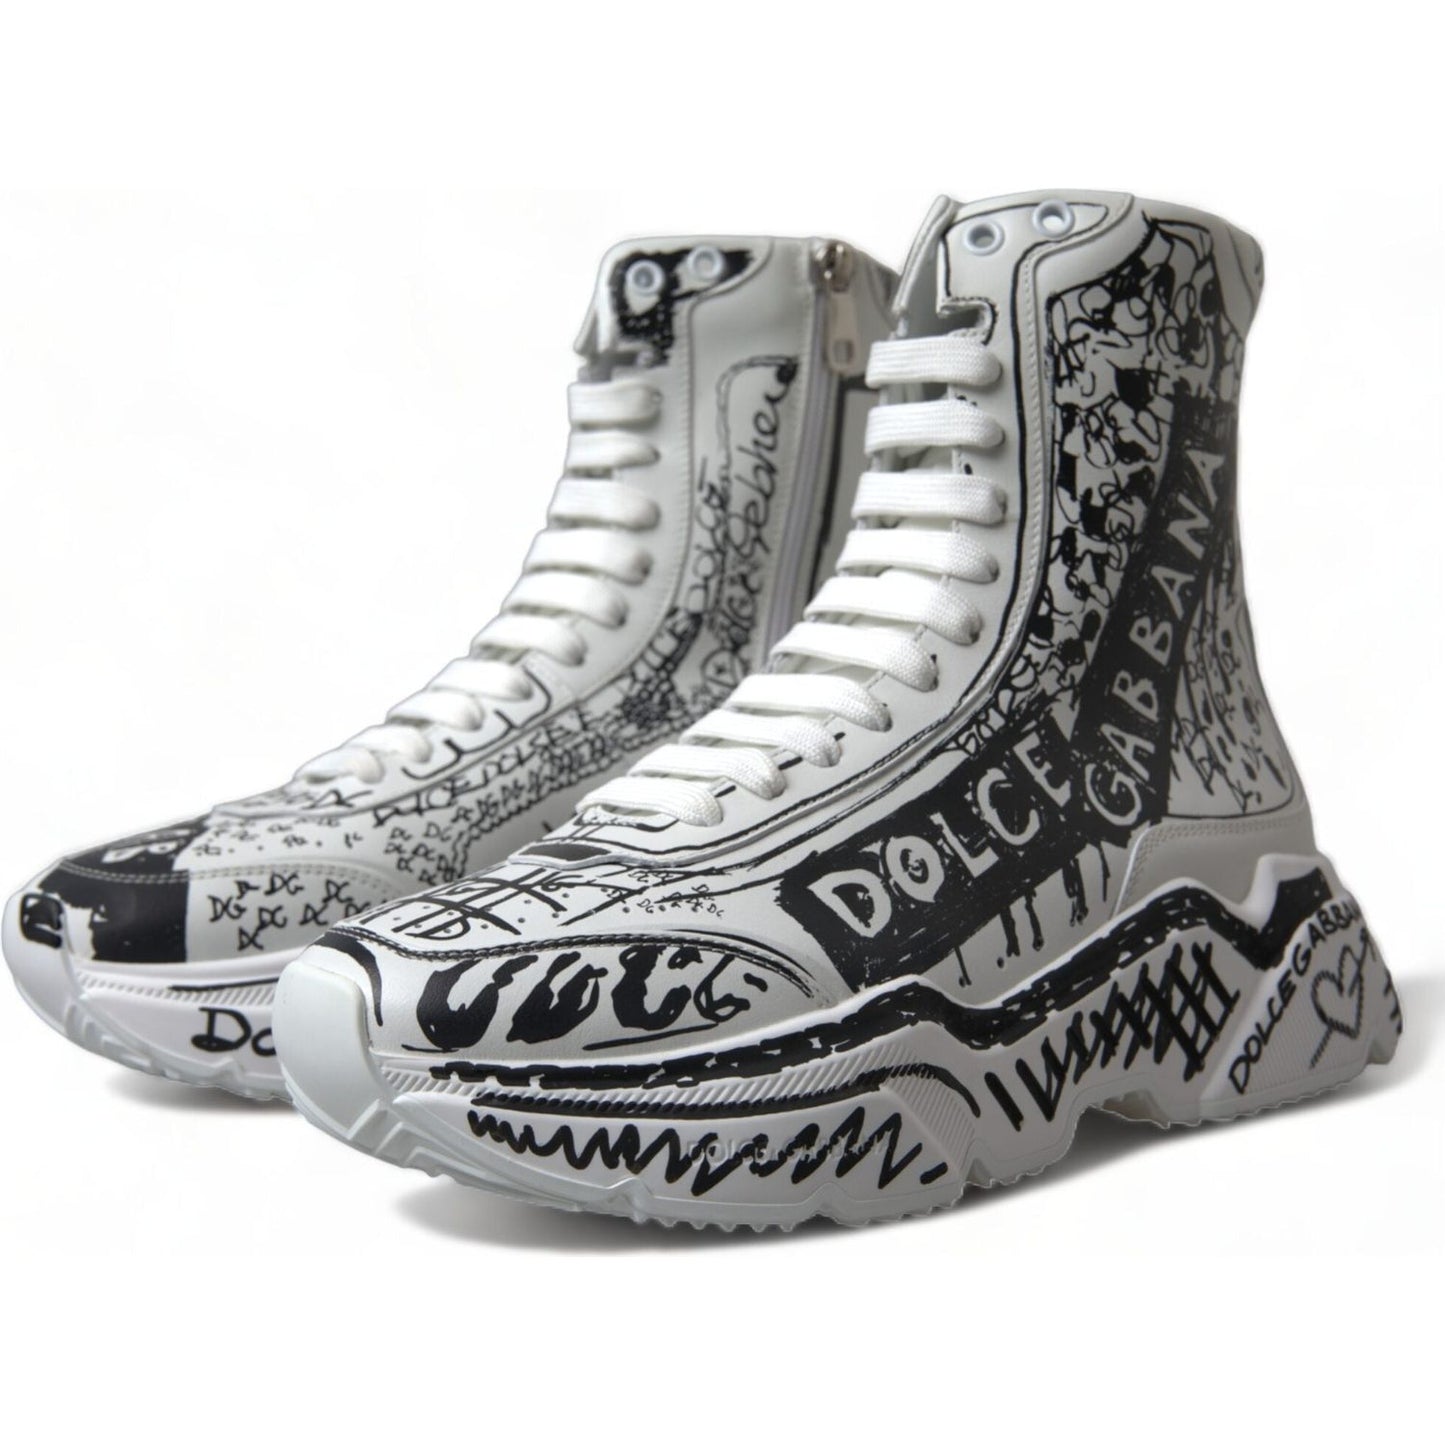 Dolce & Gabbana Daymaster Graffiti Print Mid Top Sneakers white-black-graffiti-daymaster-sneakers-shoes